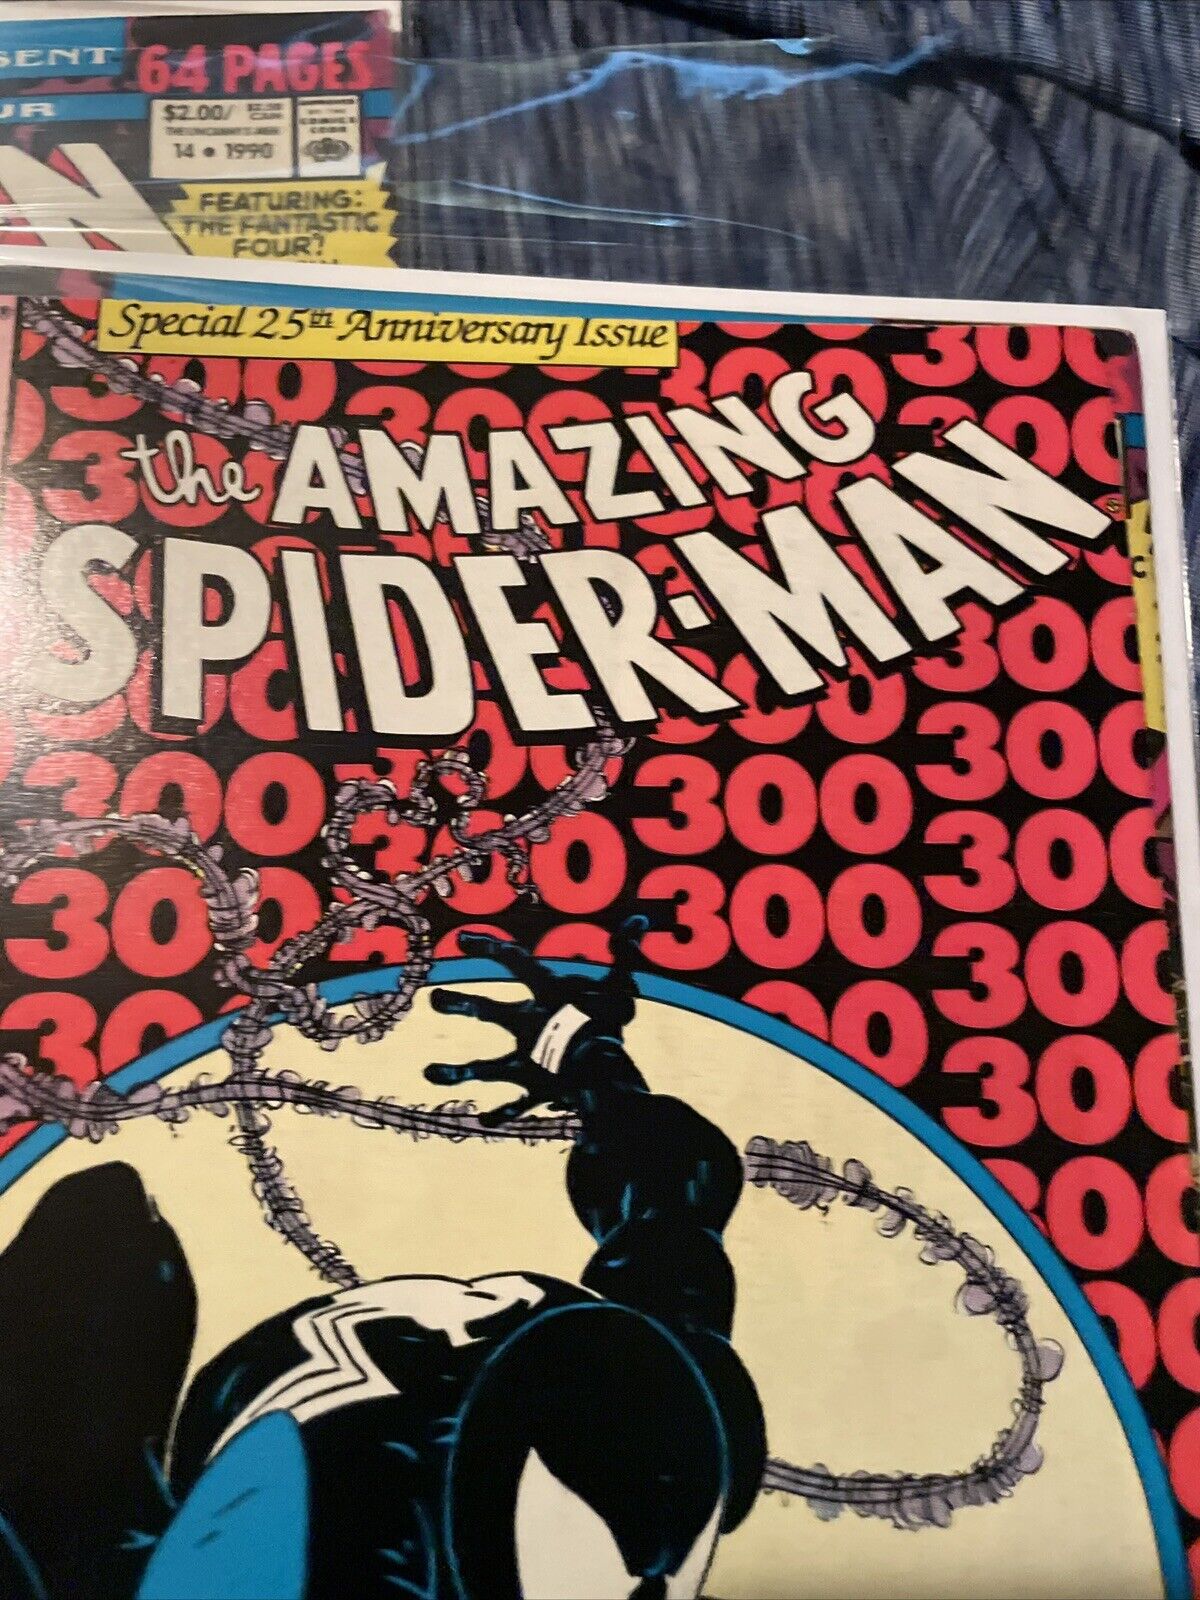 The Amazing Spider-Man #300 (Marvel Comics May 1988)